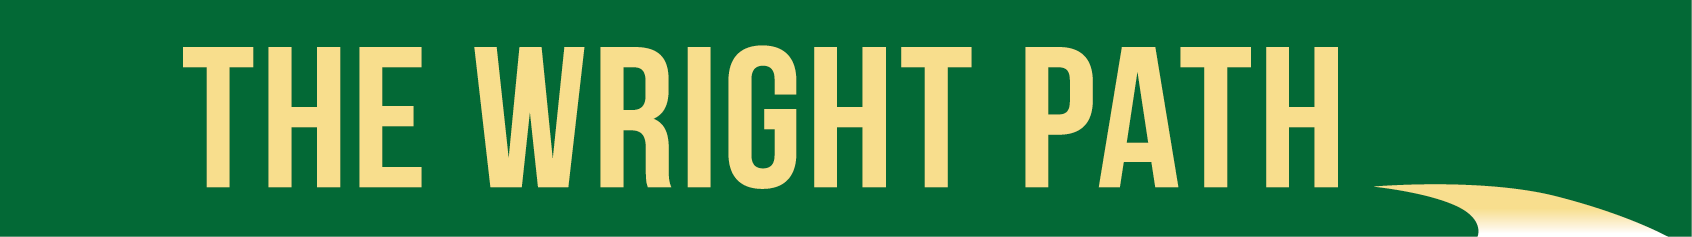 The Wright Path Logo